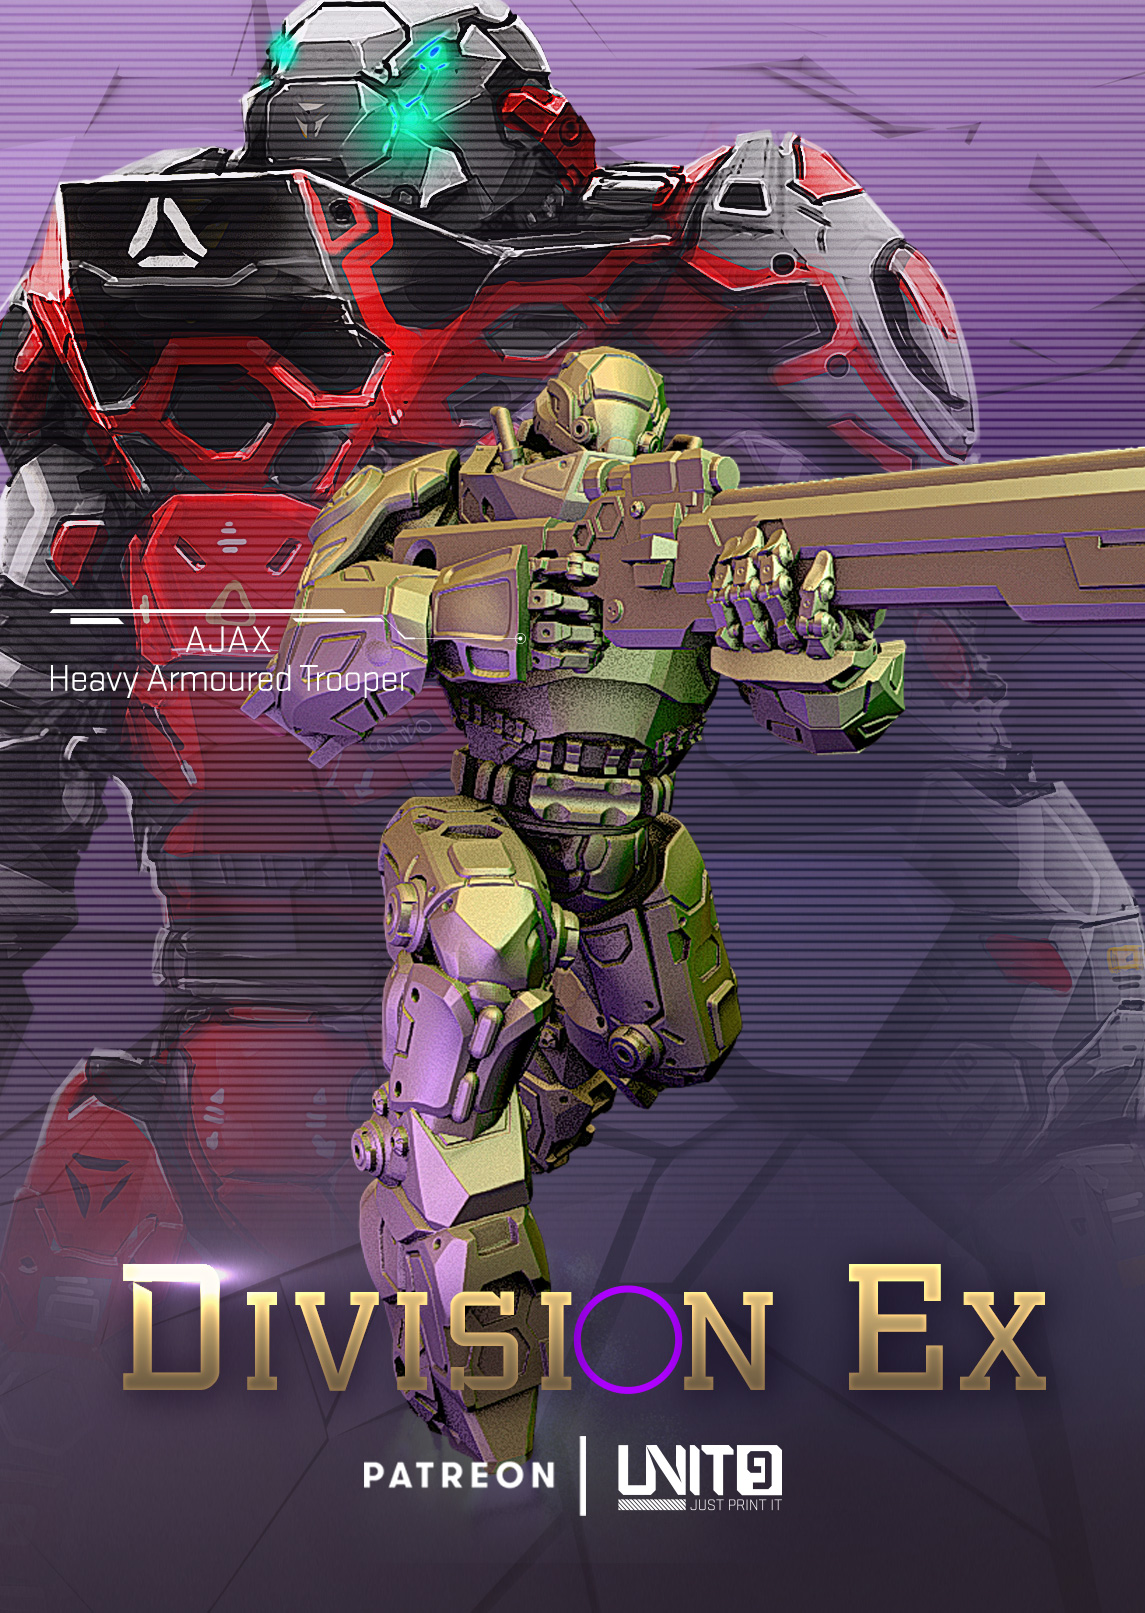 Division Ex Proxy Wars Team - August 2021 Unit9 AJAX 3